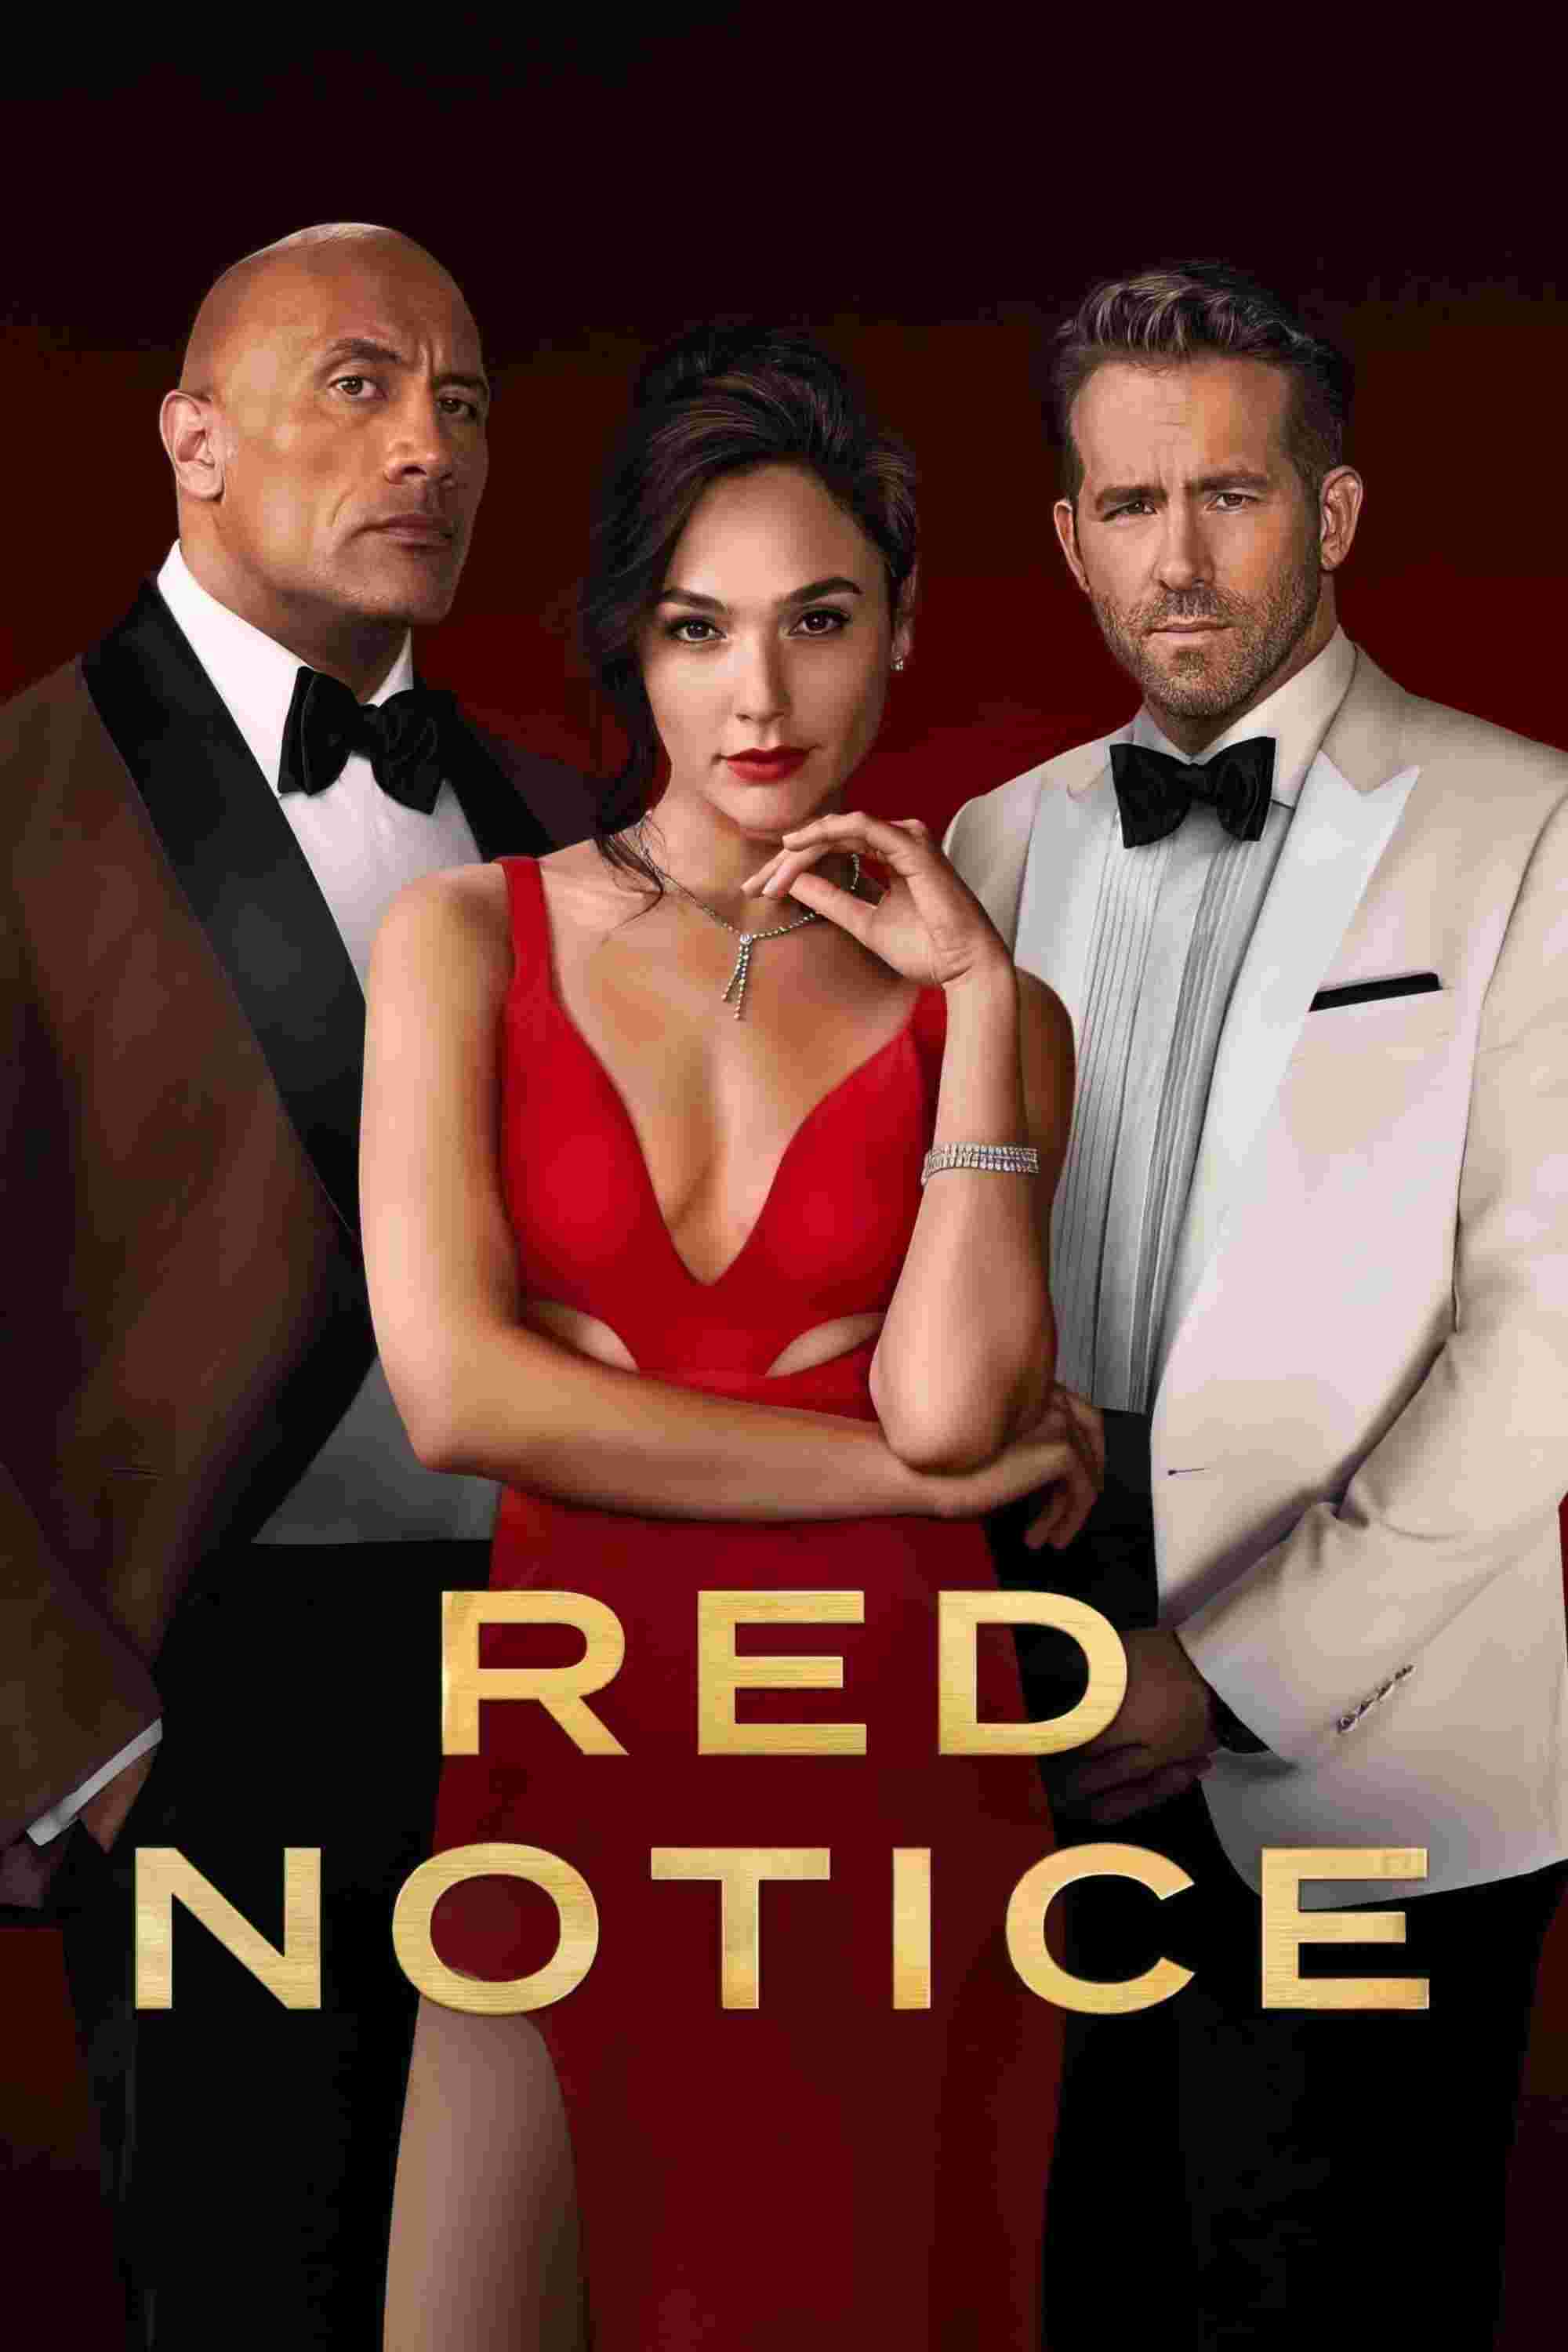 Red Notice (2021) Dwayne Johnson